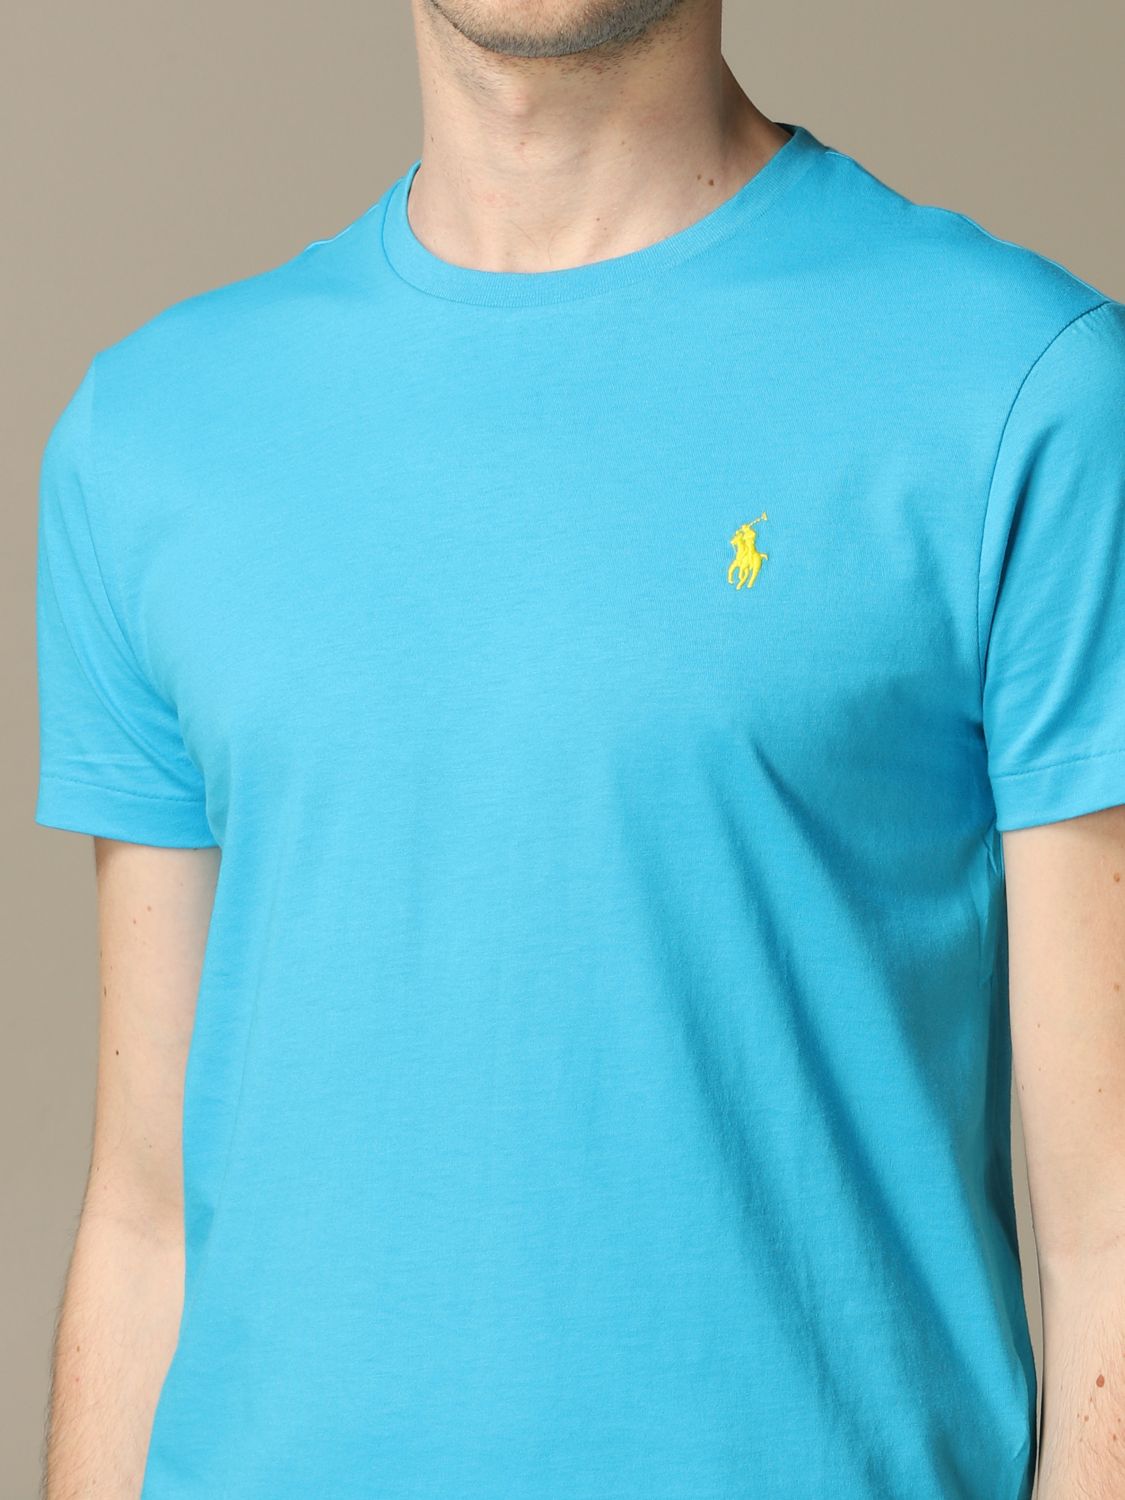 Polo Ralph Lauren Outlet: T-shirt men - Turquoise | T-Shirt Polo Ralph